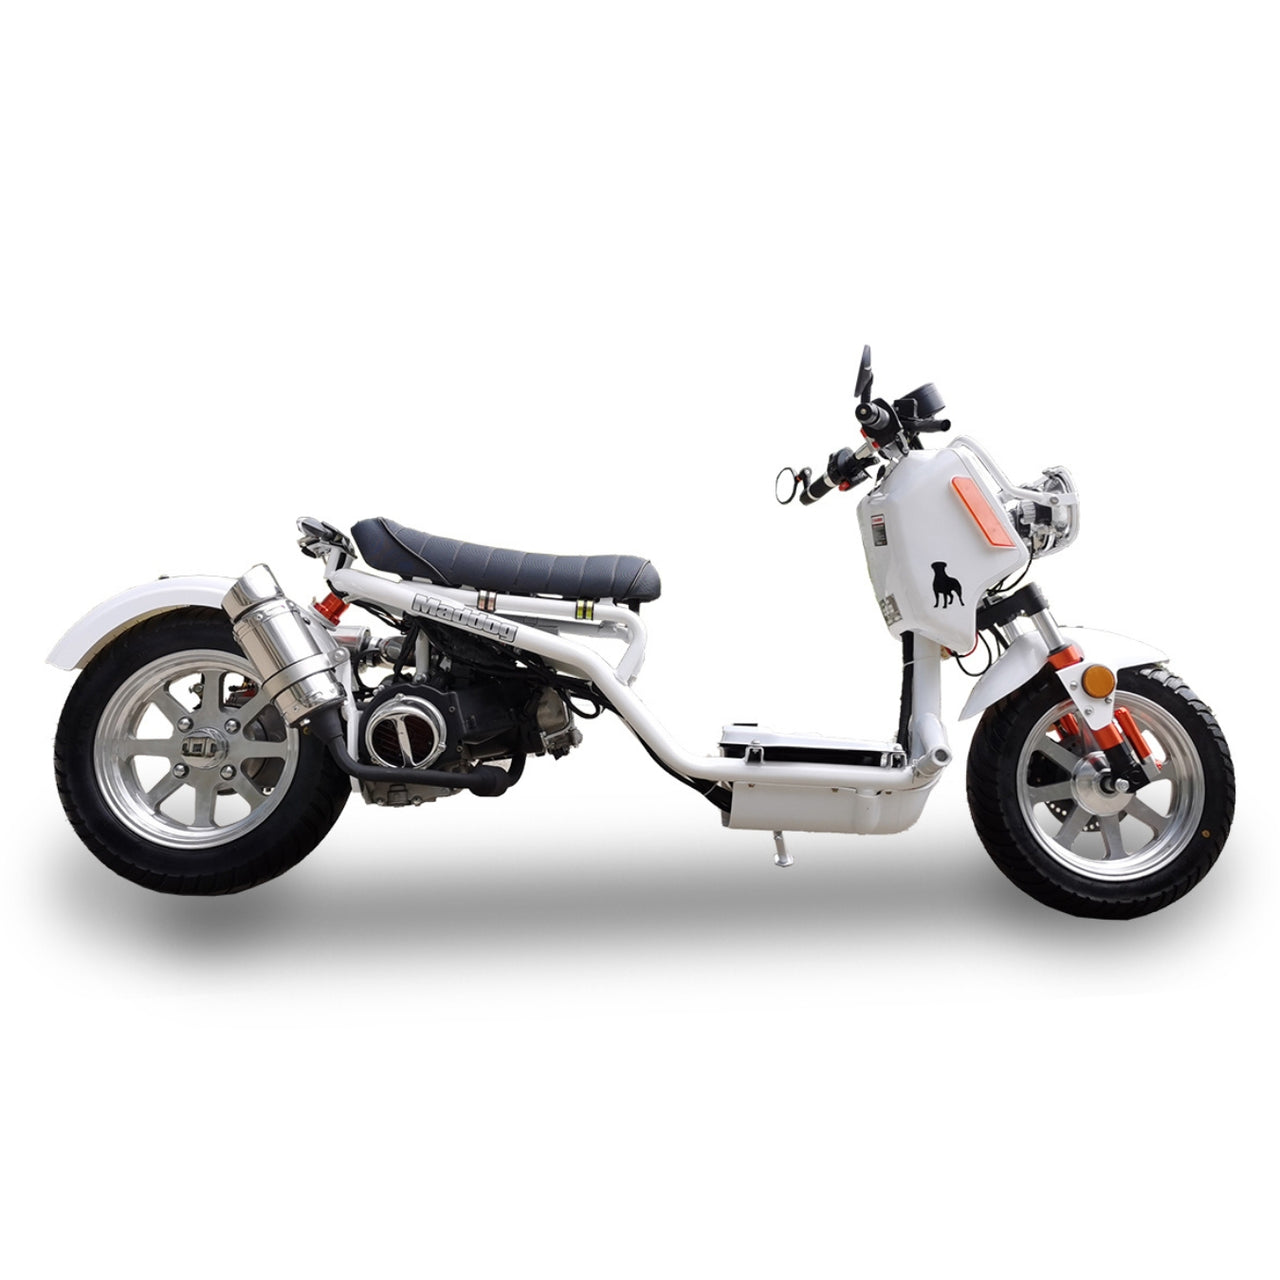 IceBear Maddog Gen 4 150cc Motorcycle